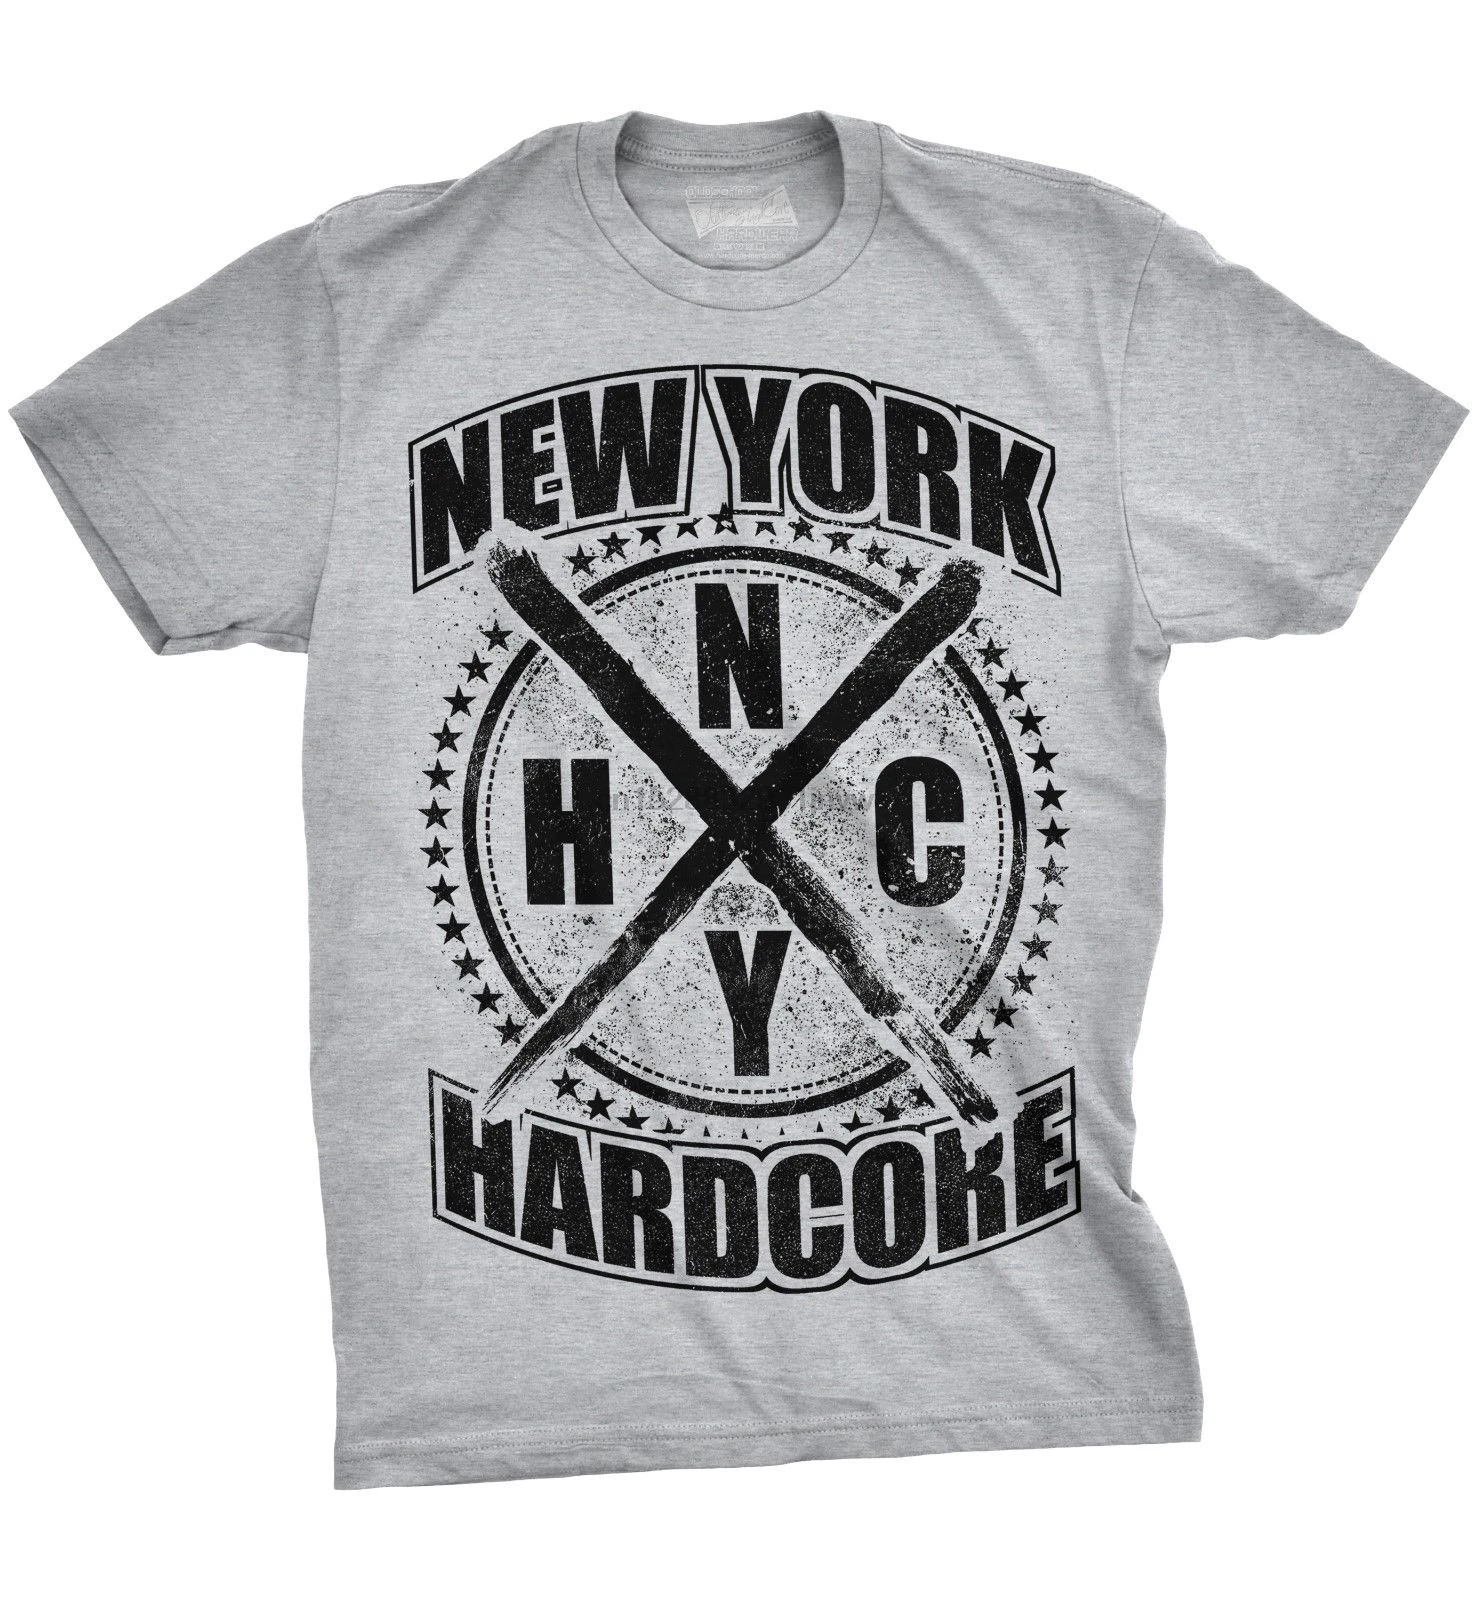 

Футболка New York Hardcore CROSS Heathergray S-3XL NYHC Agnostic Front Madball Мужская хлопковая футболка с принтом Футболка